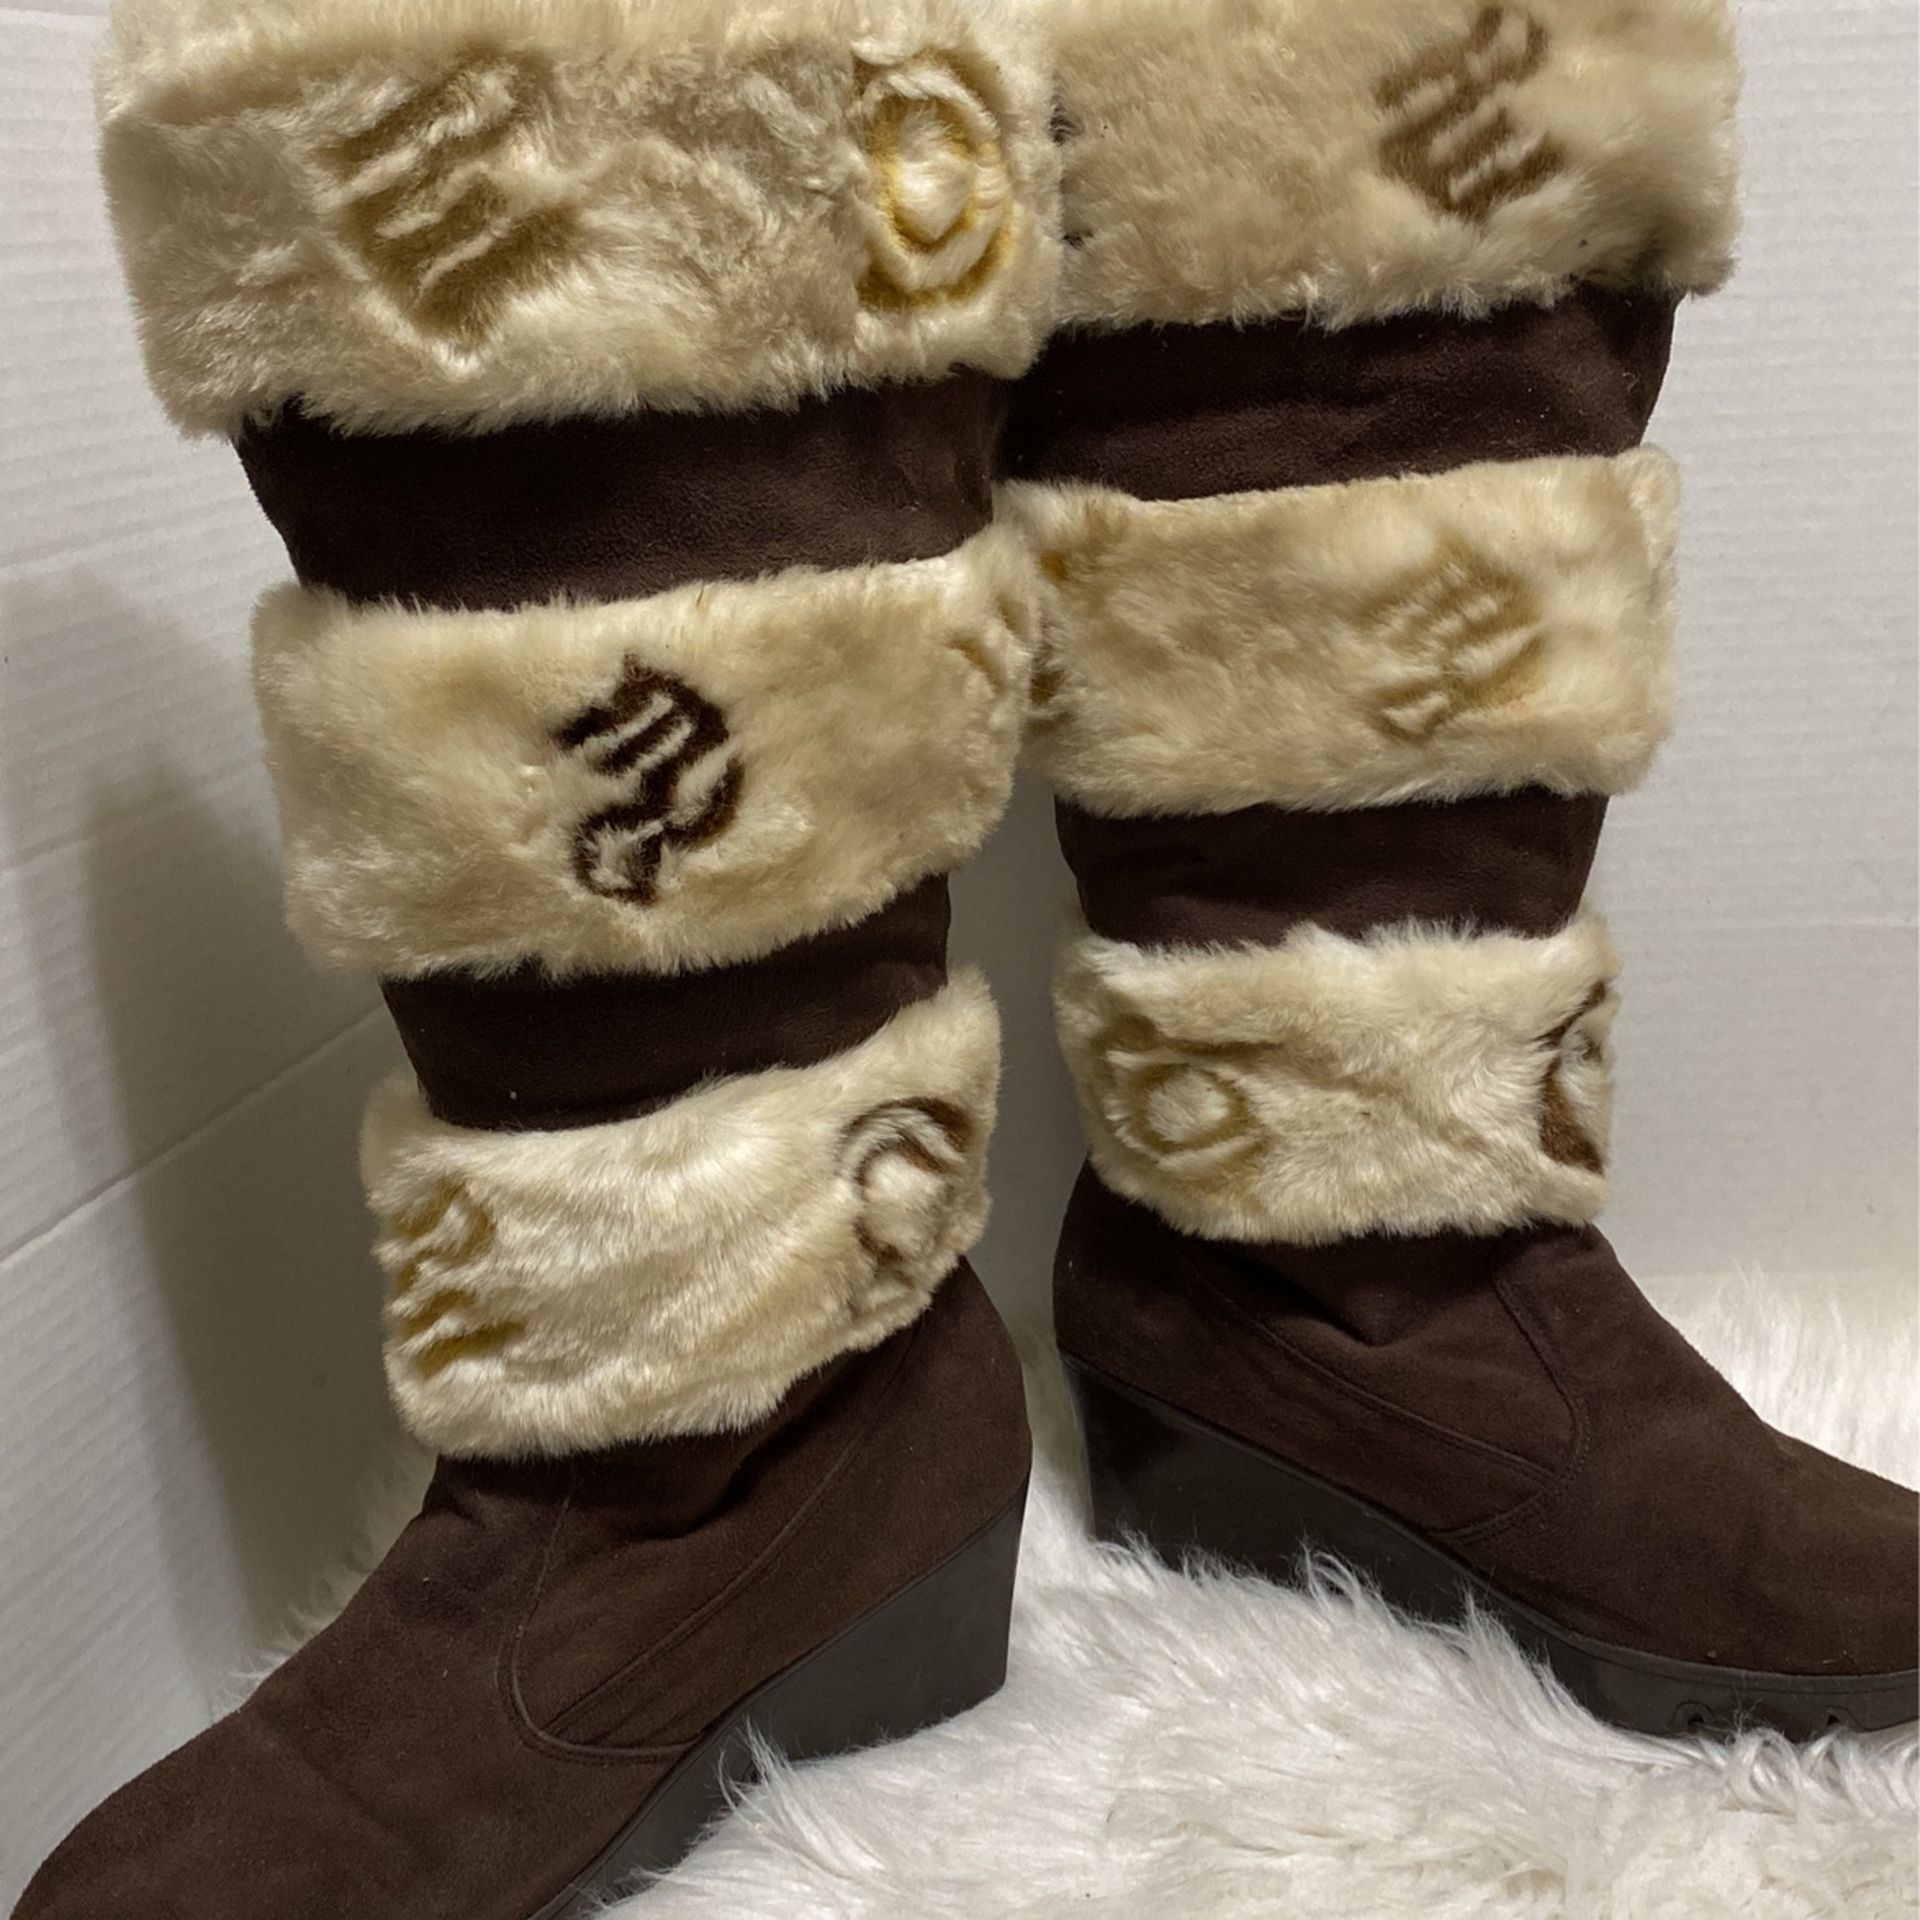 Rocawear Elle Faux fur wedge boots size 9